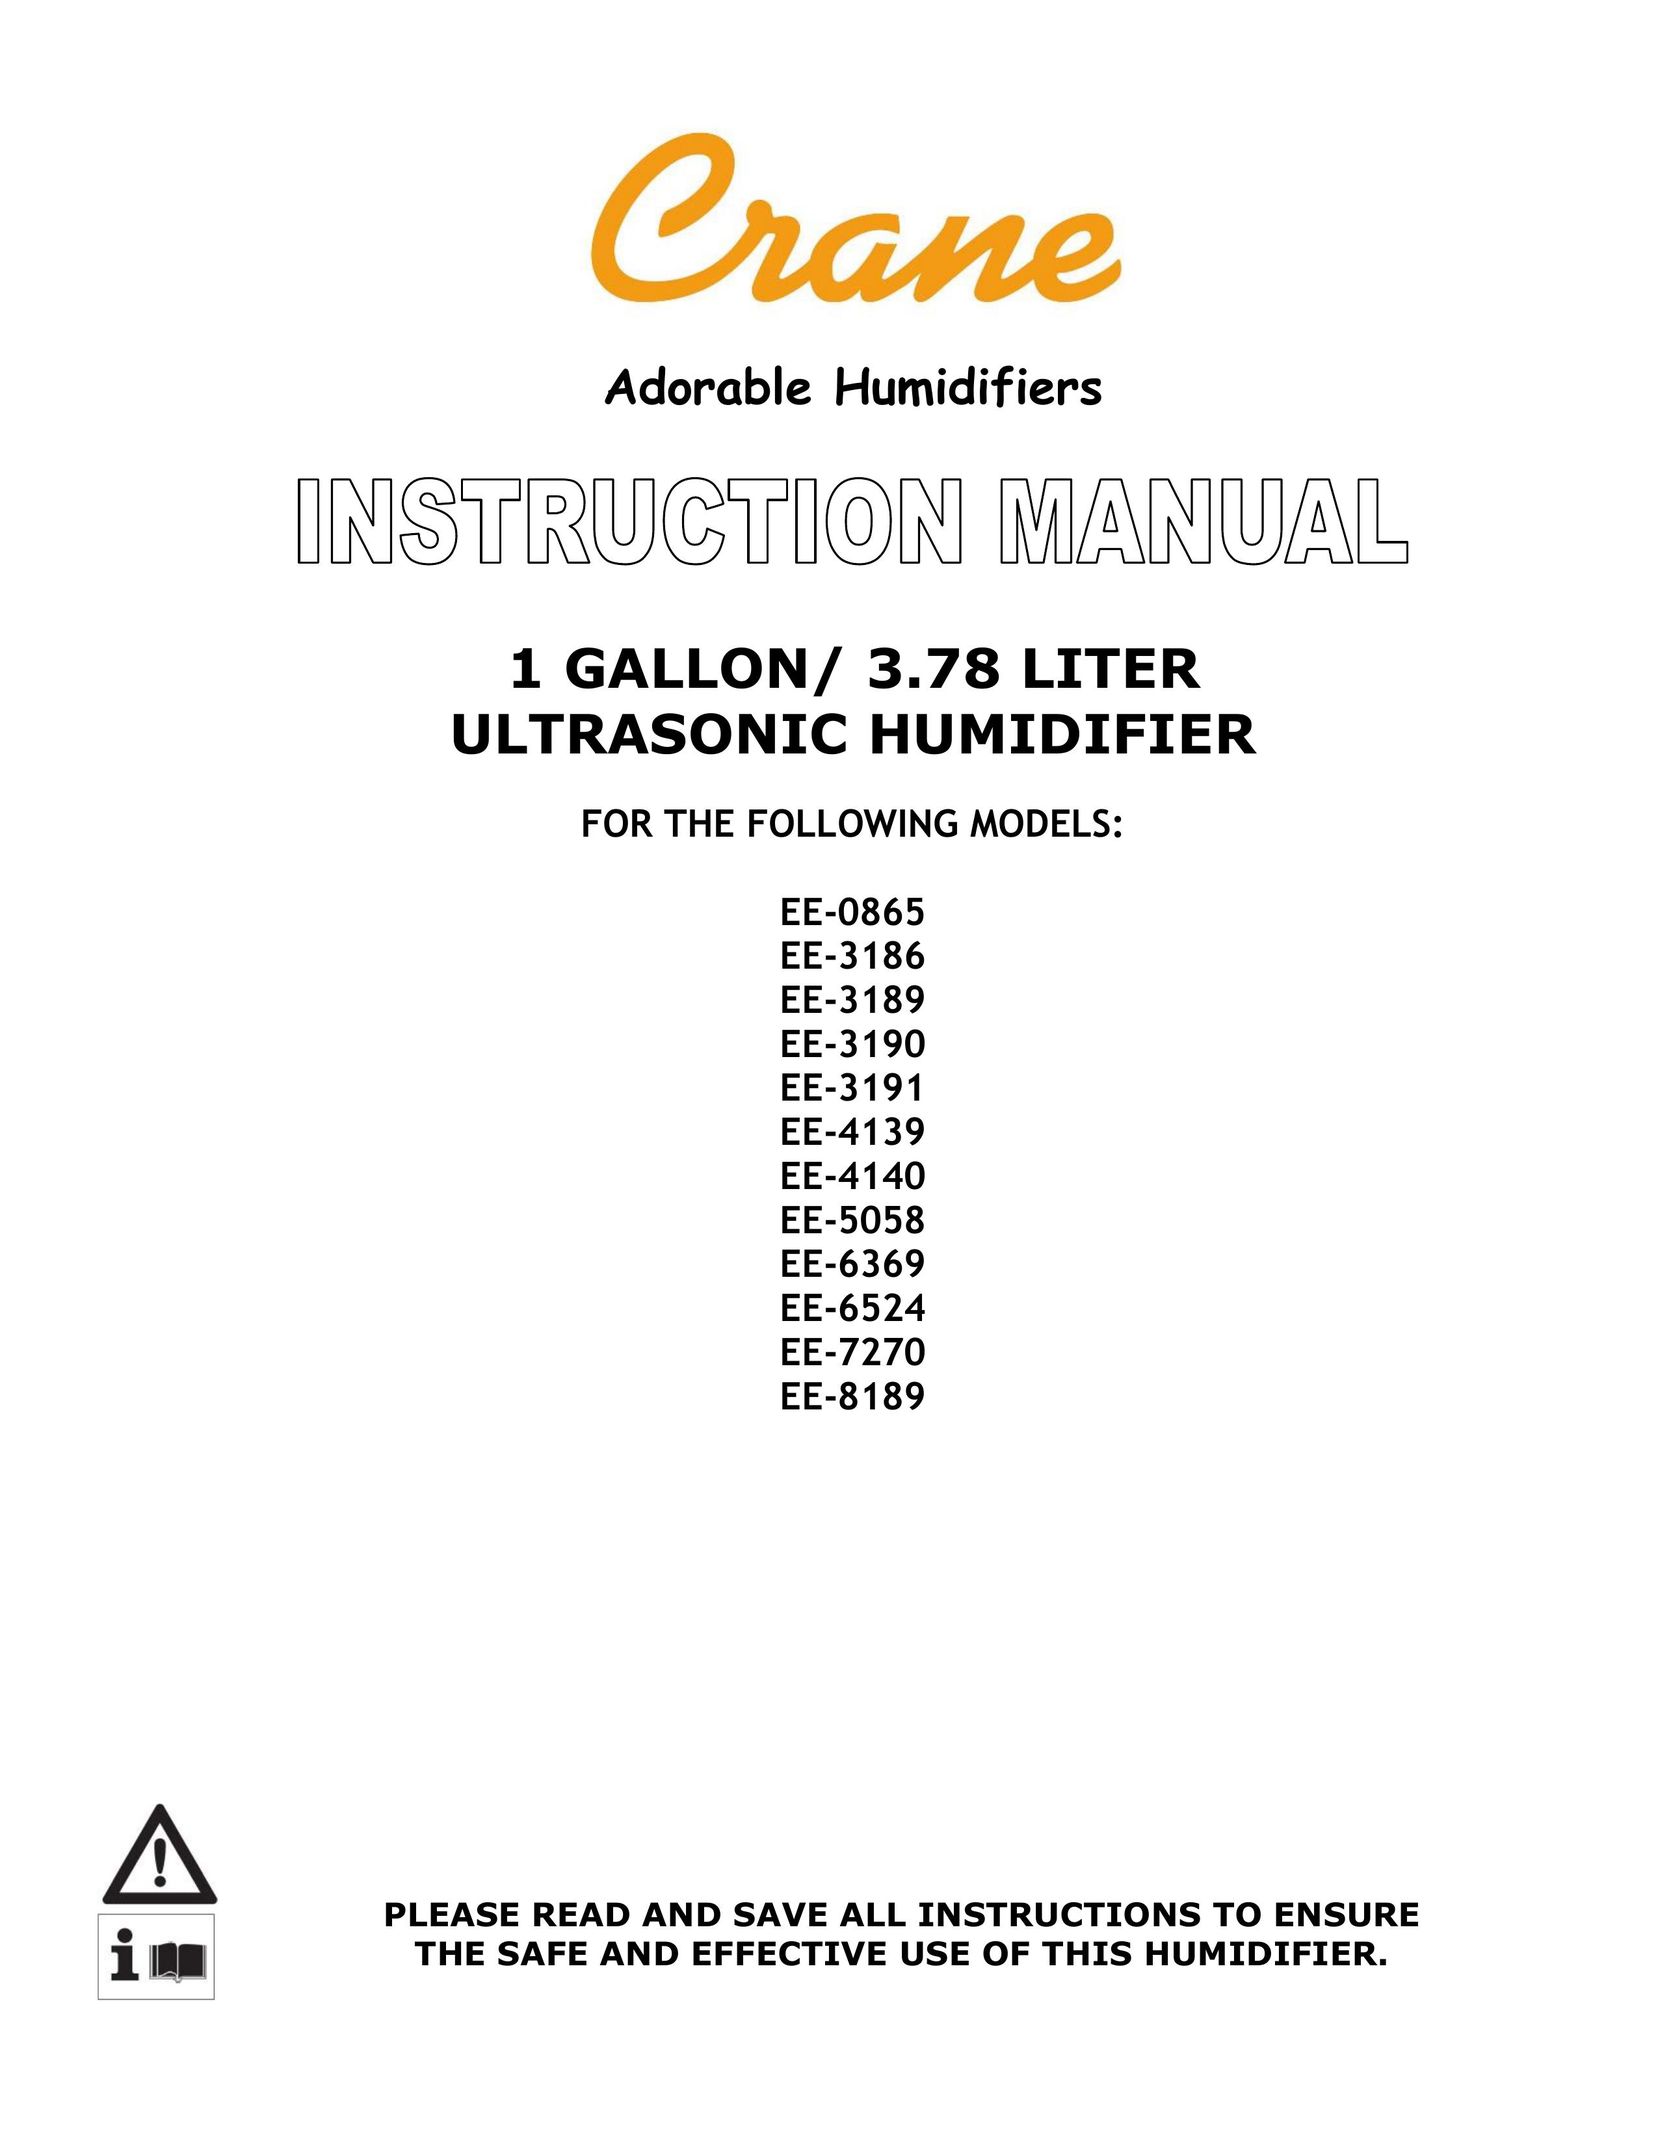 Crane EE-0865 Humidifier User Manual